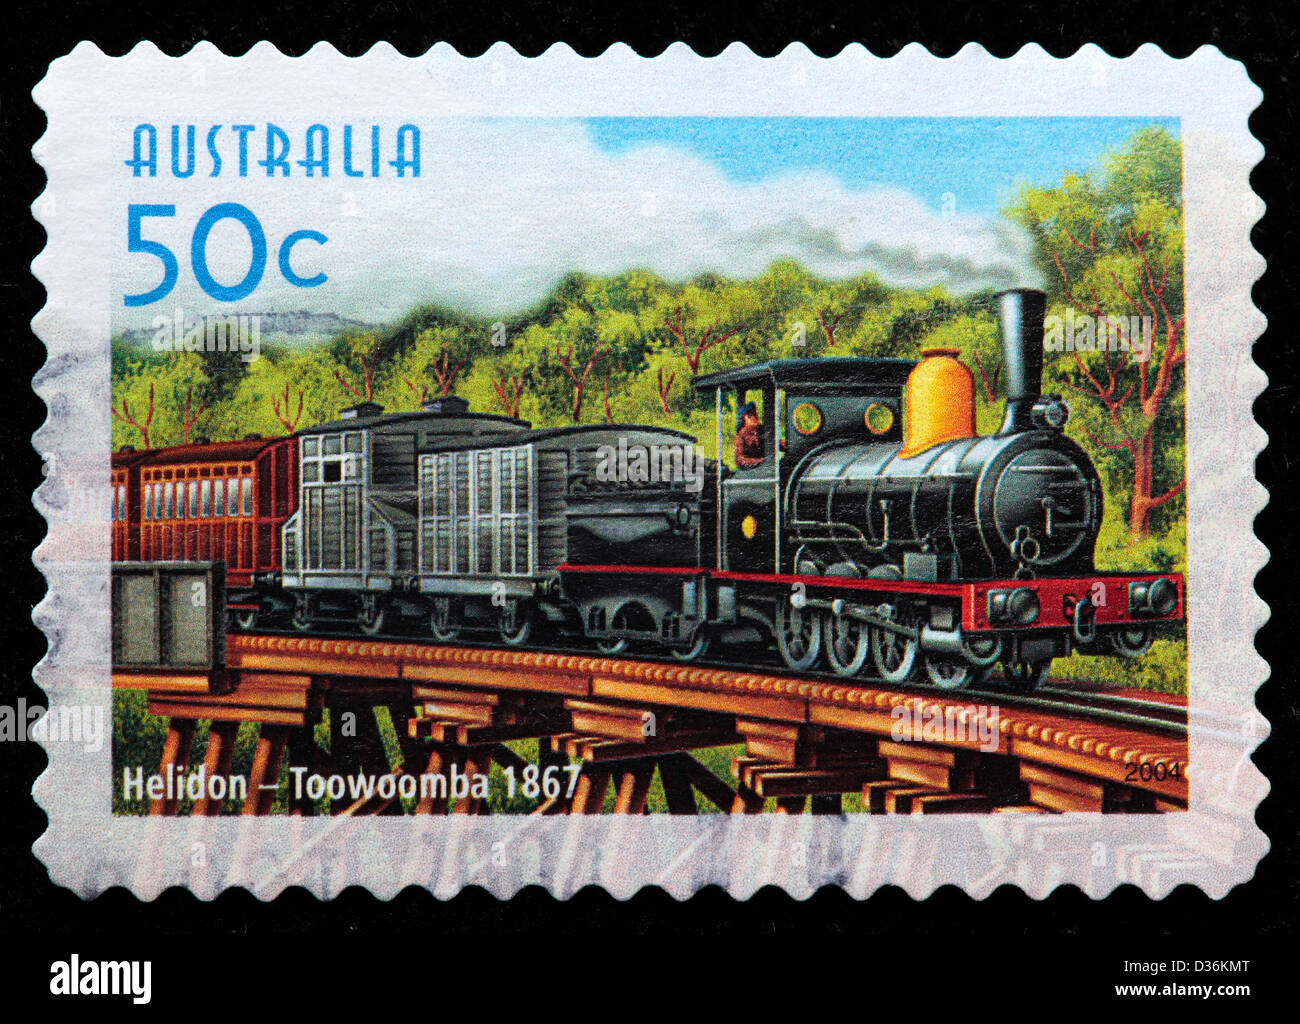 Helidon Toowoomba line, Australian Railways, postage stamp, Australia, 2004 Stock Photo